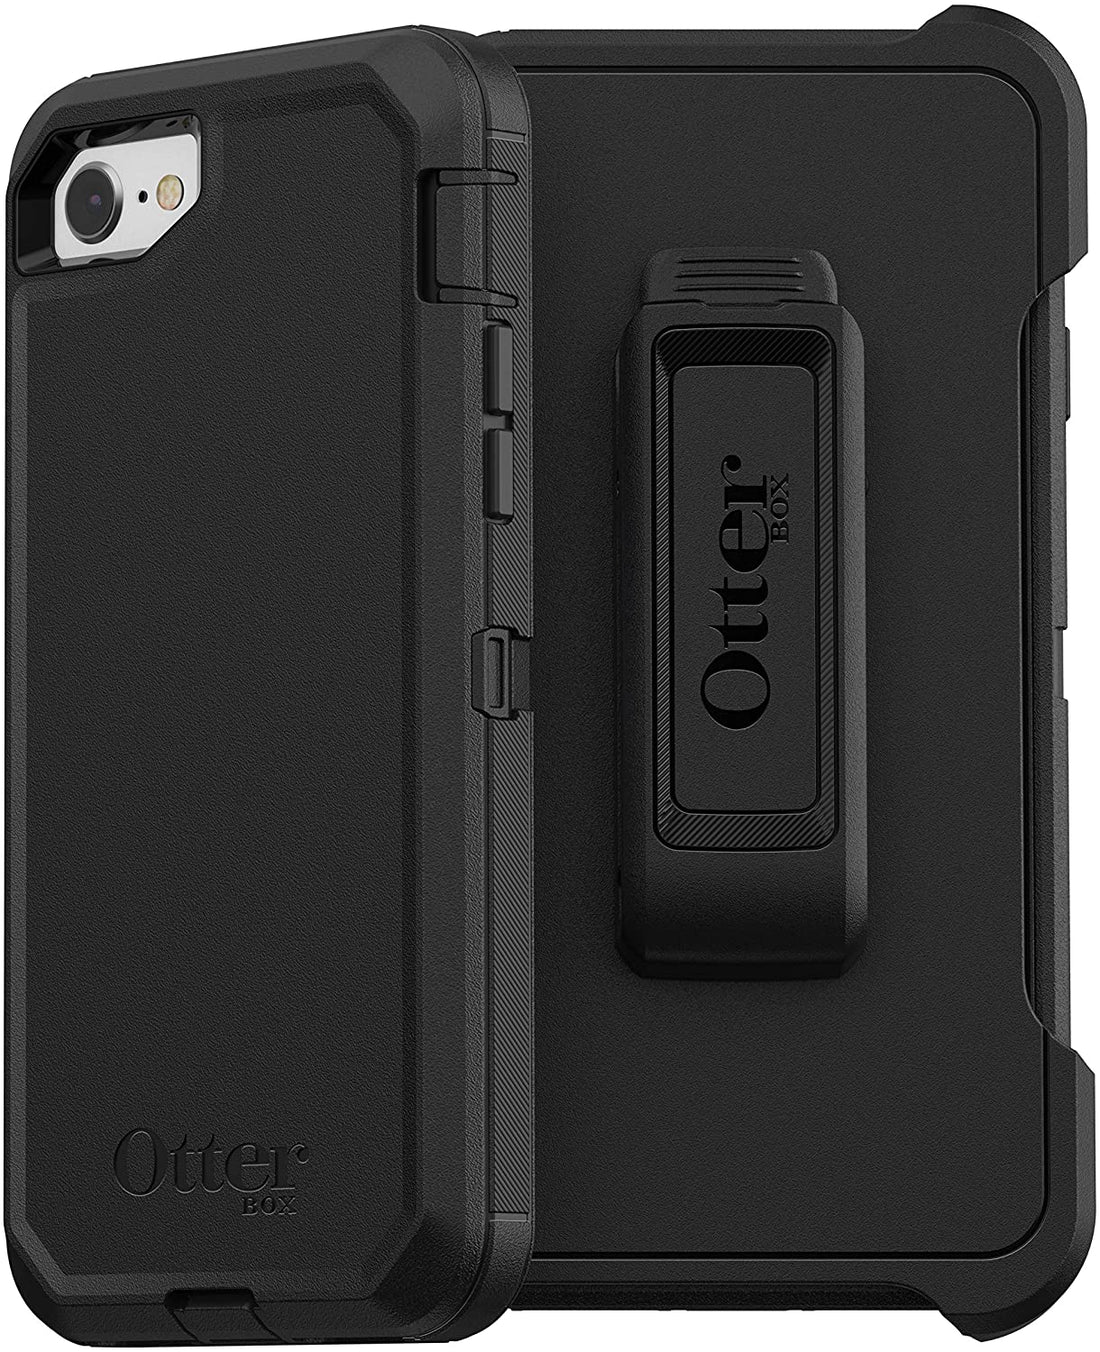 OtterBox DEFENDER SERIES Case for iPhone SE (2nd gen) / iPhone 8/7 - Black (Certified Refurbished)